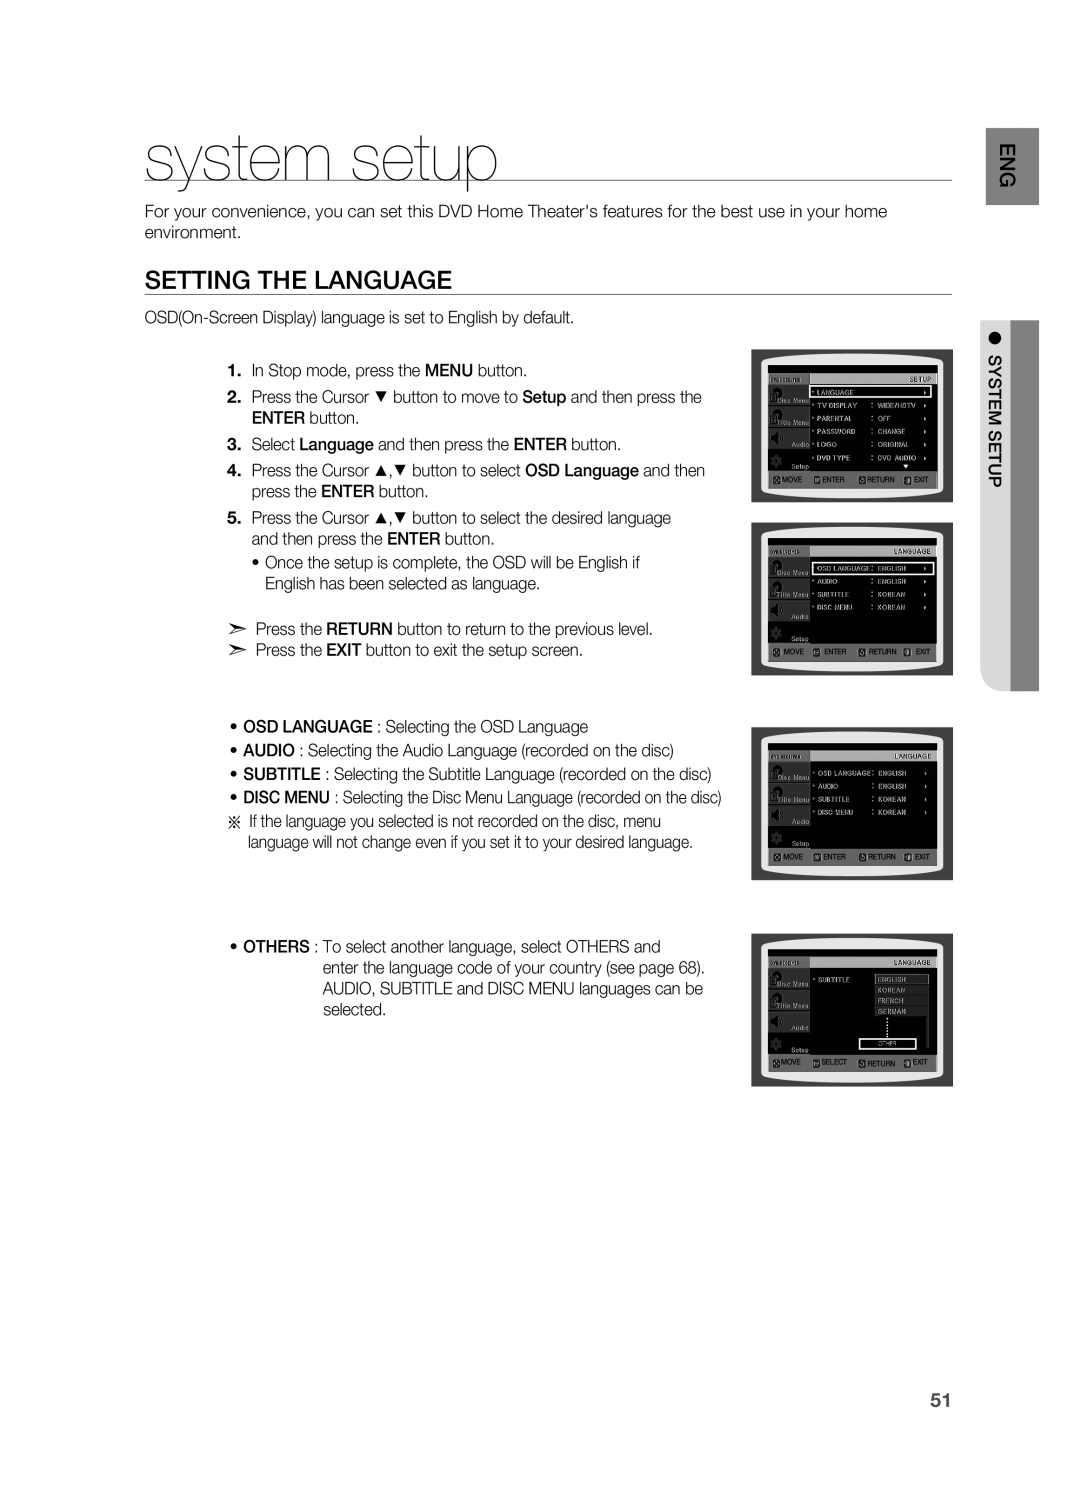 Samsung HT-TWZ415 user manual system setup, Setting the Language 